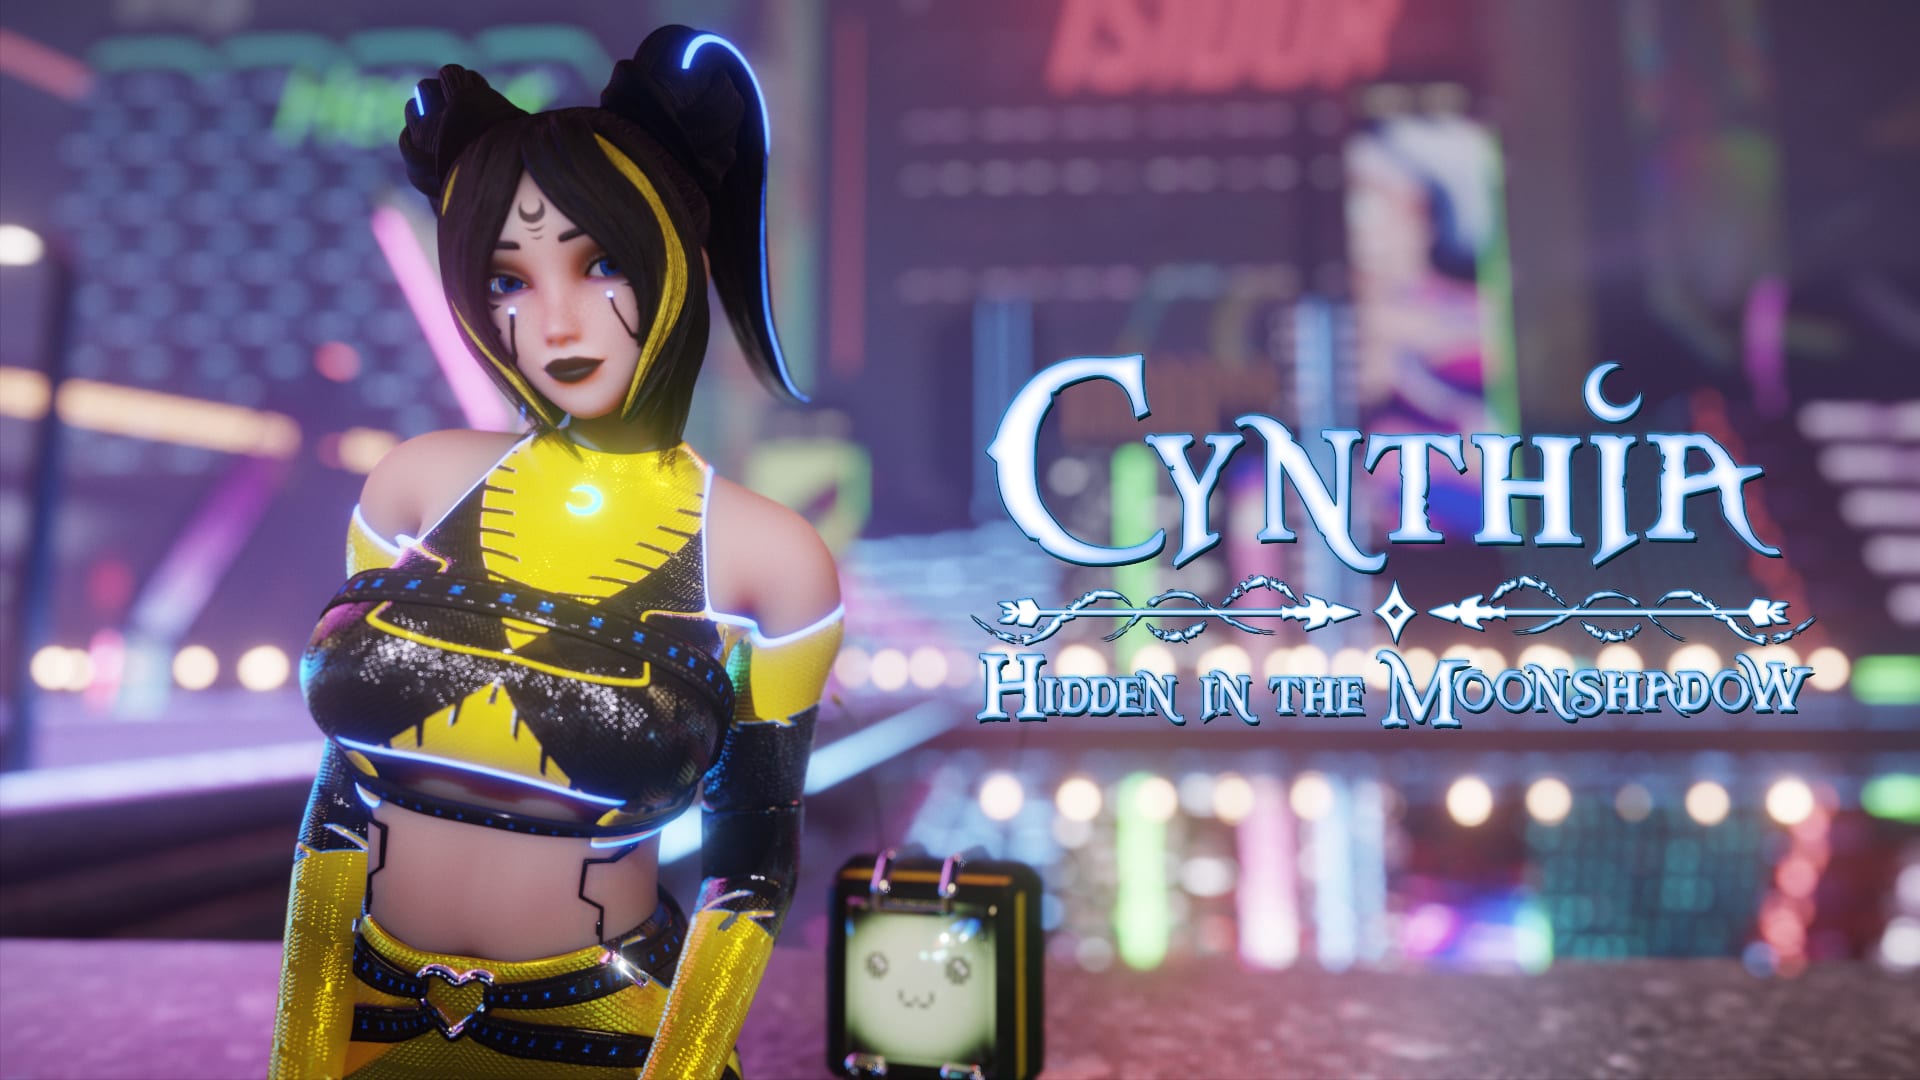 Cynthia: Hidden in the Moonshadow - 'Cyberthia' Costume 1